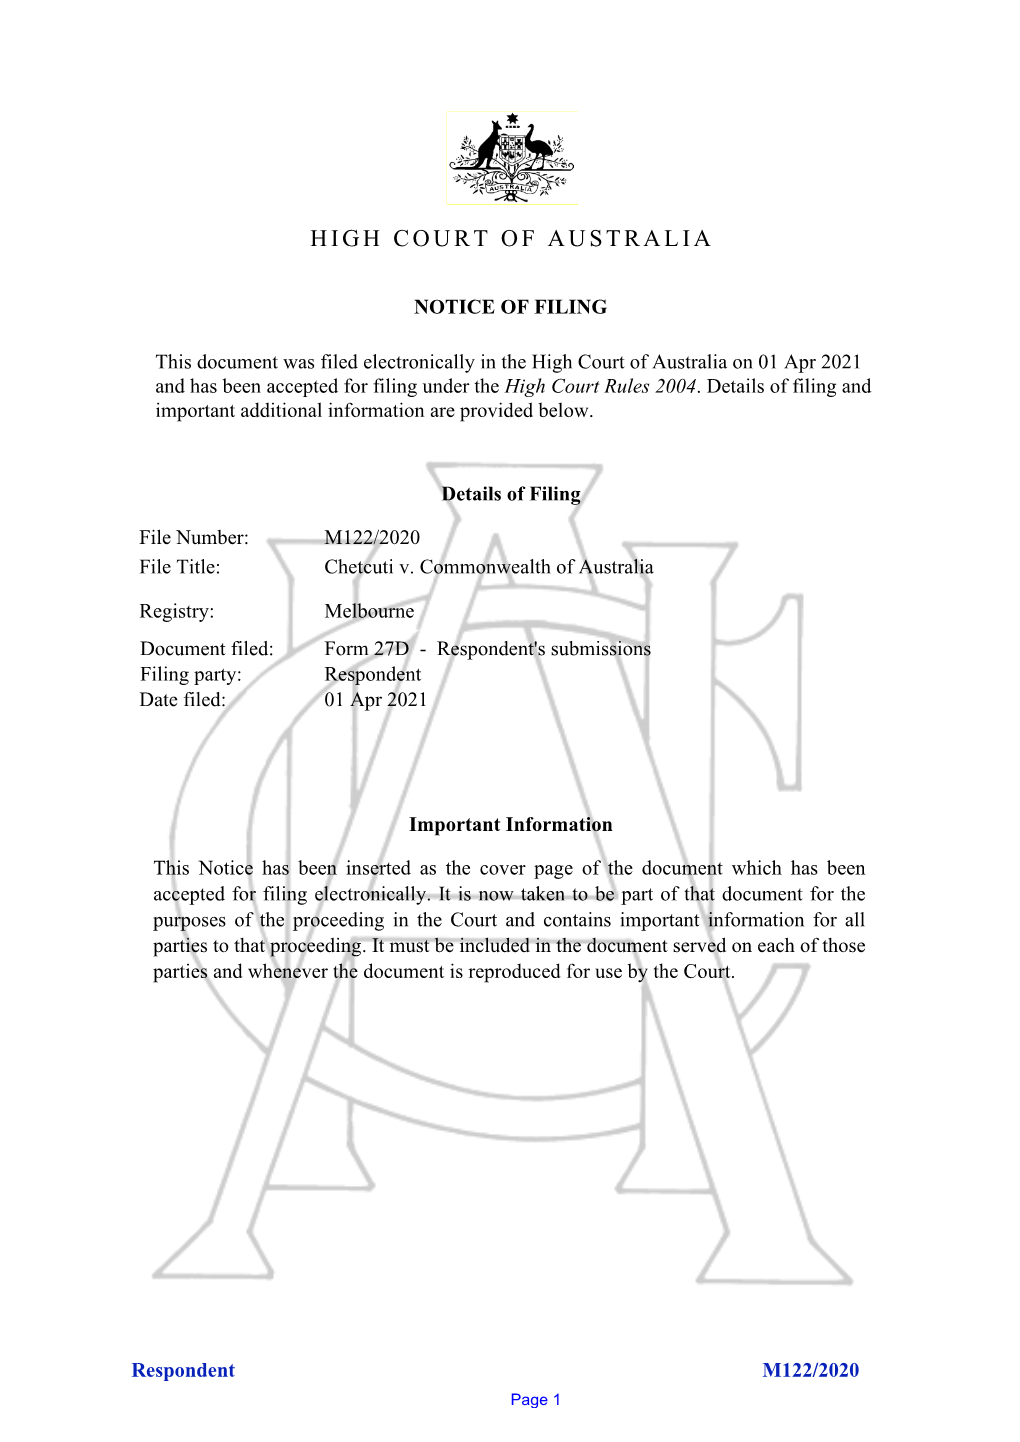 High Court of Australia Melbourne Registry